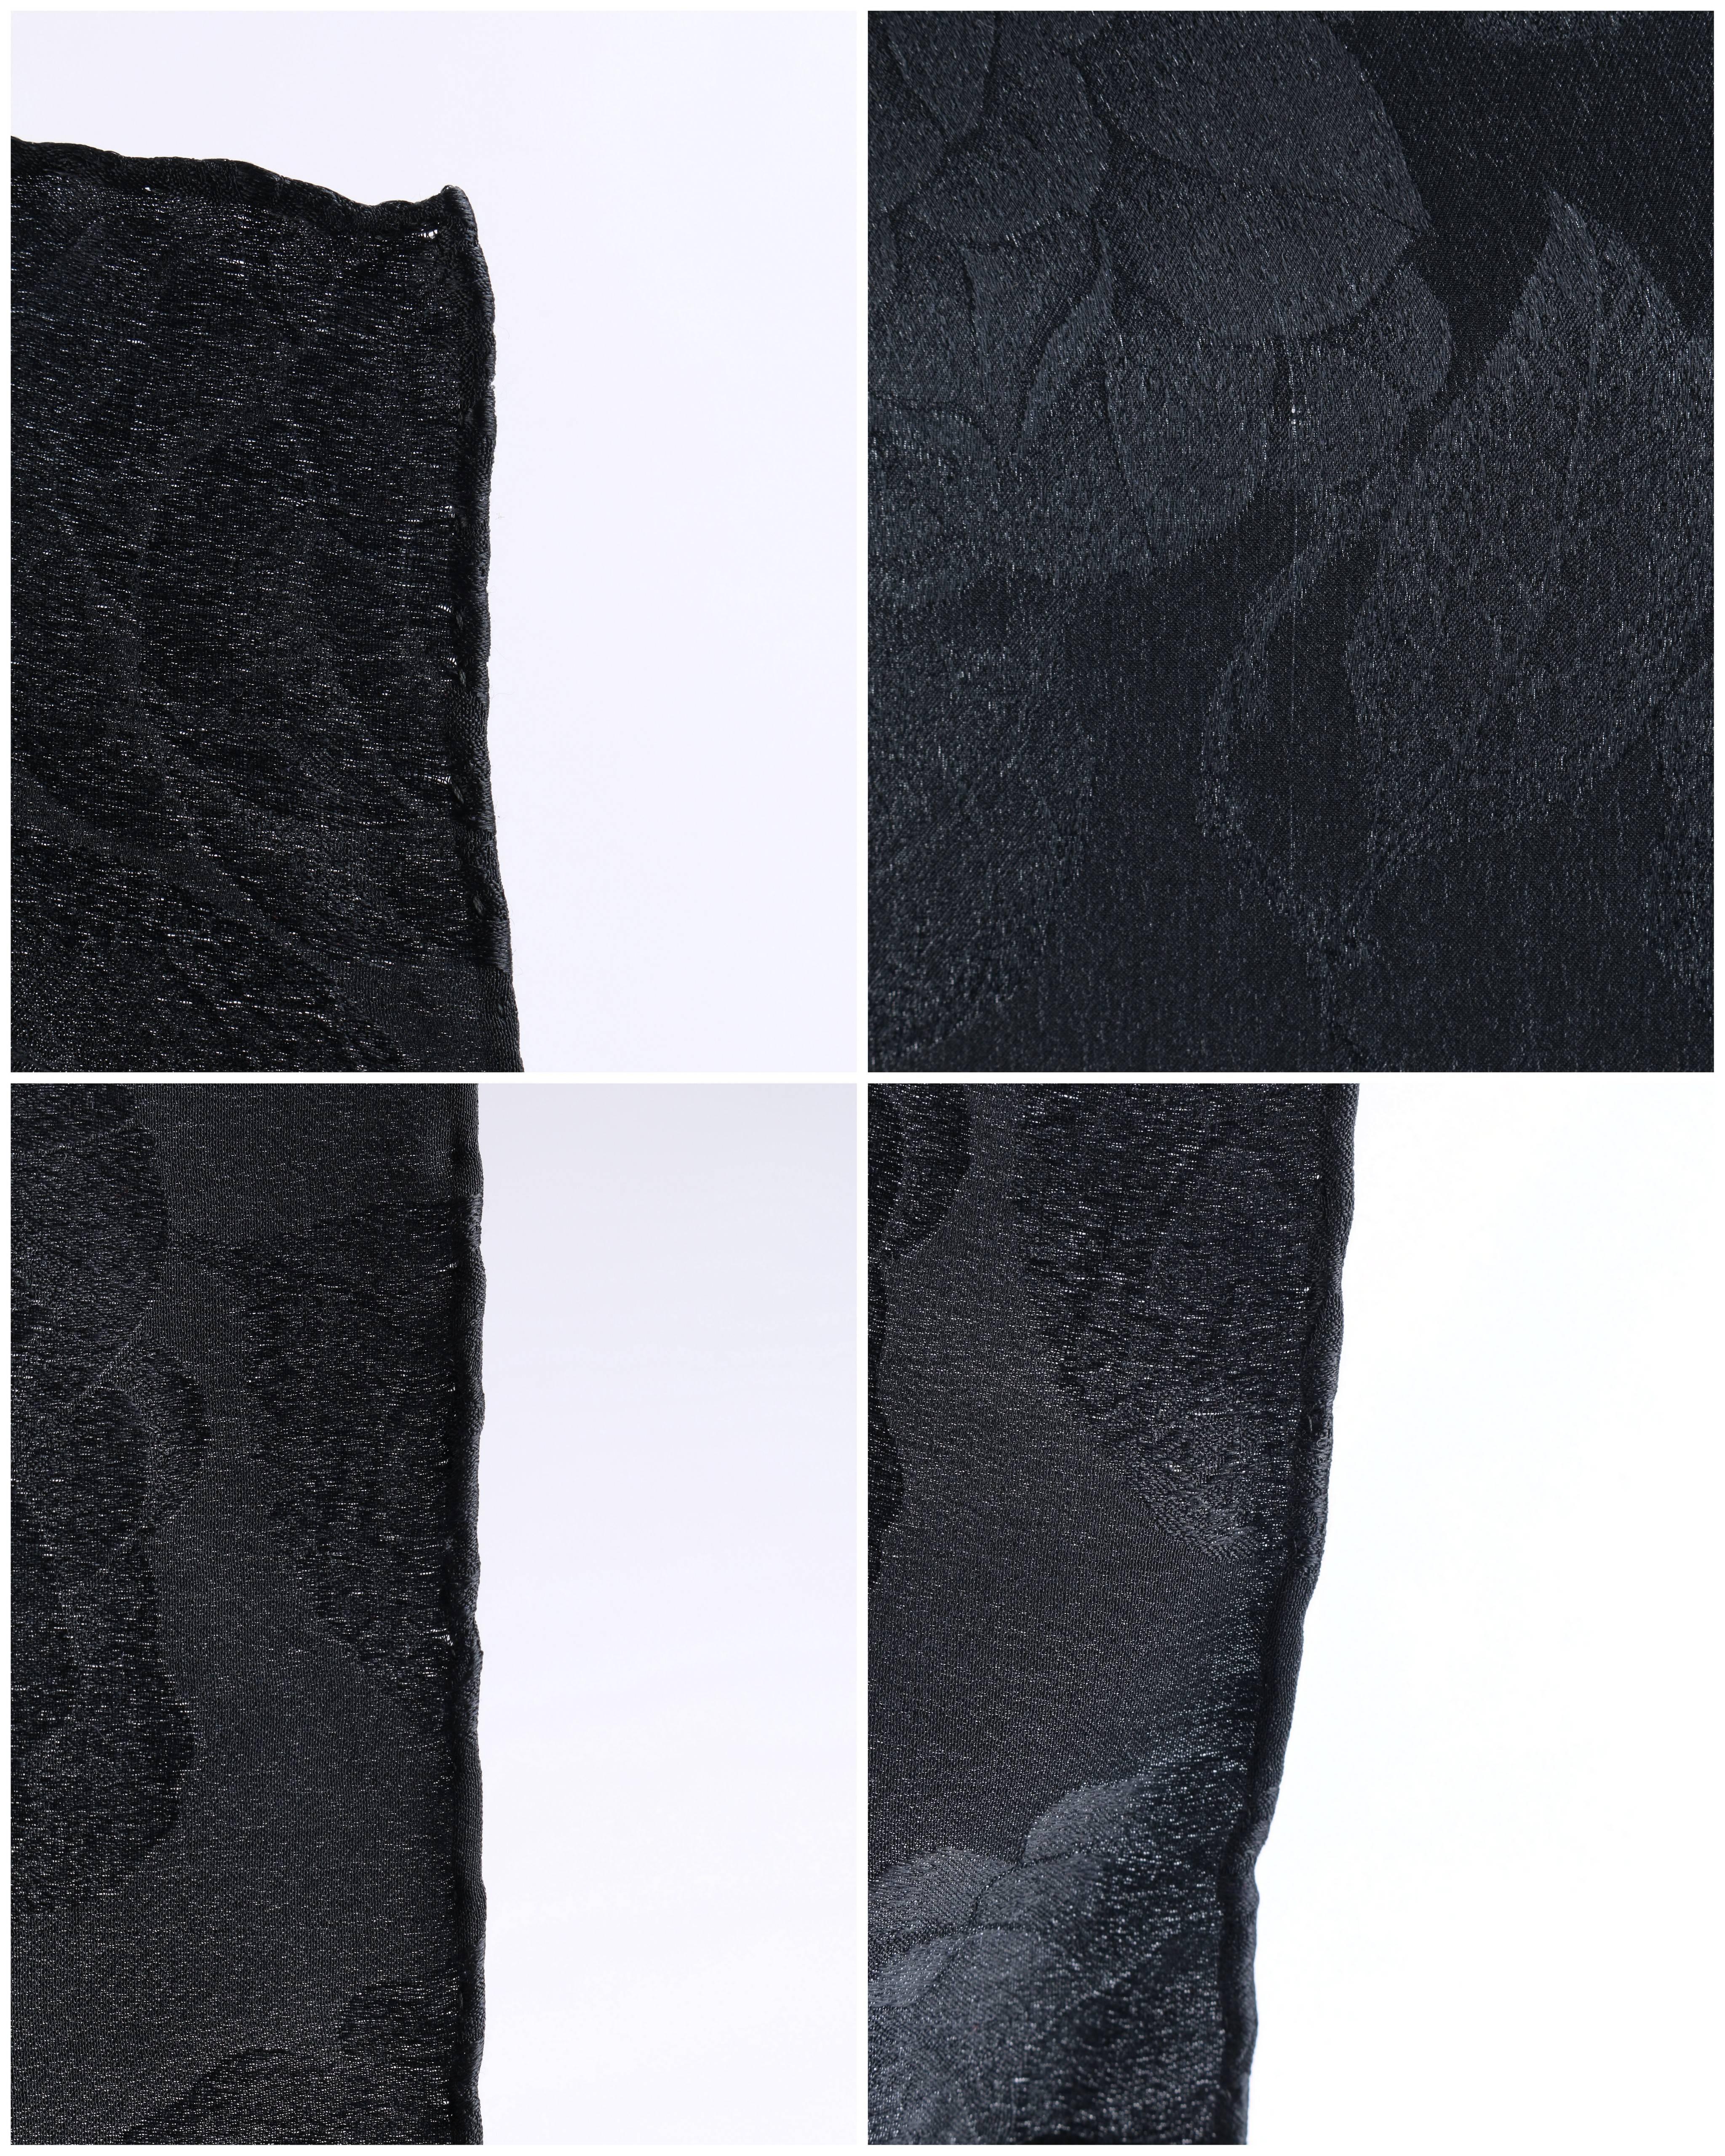 CHANEL Black Satin Camellia Print 100% Silk Large Scarf Wrap Shawl With Box  5